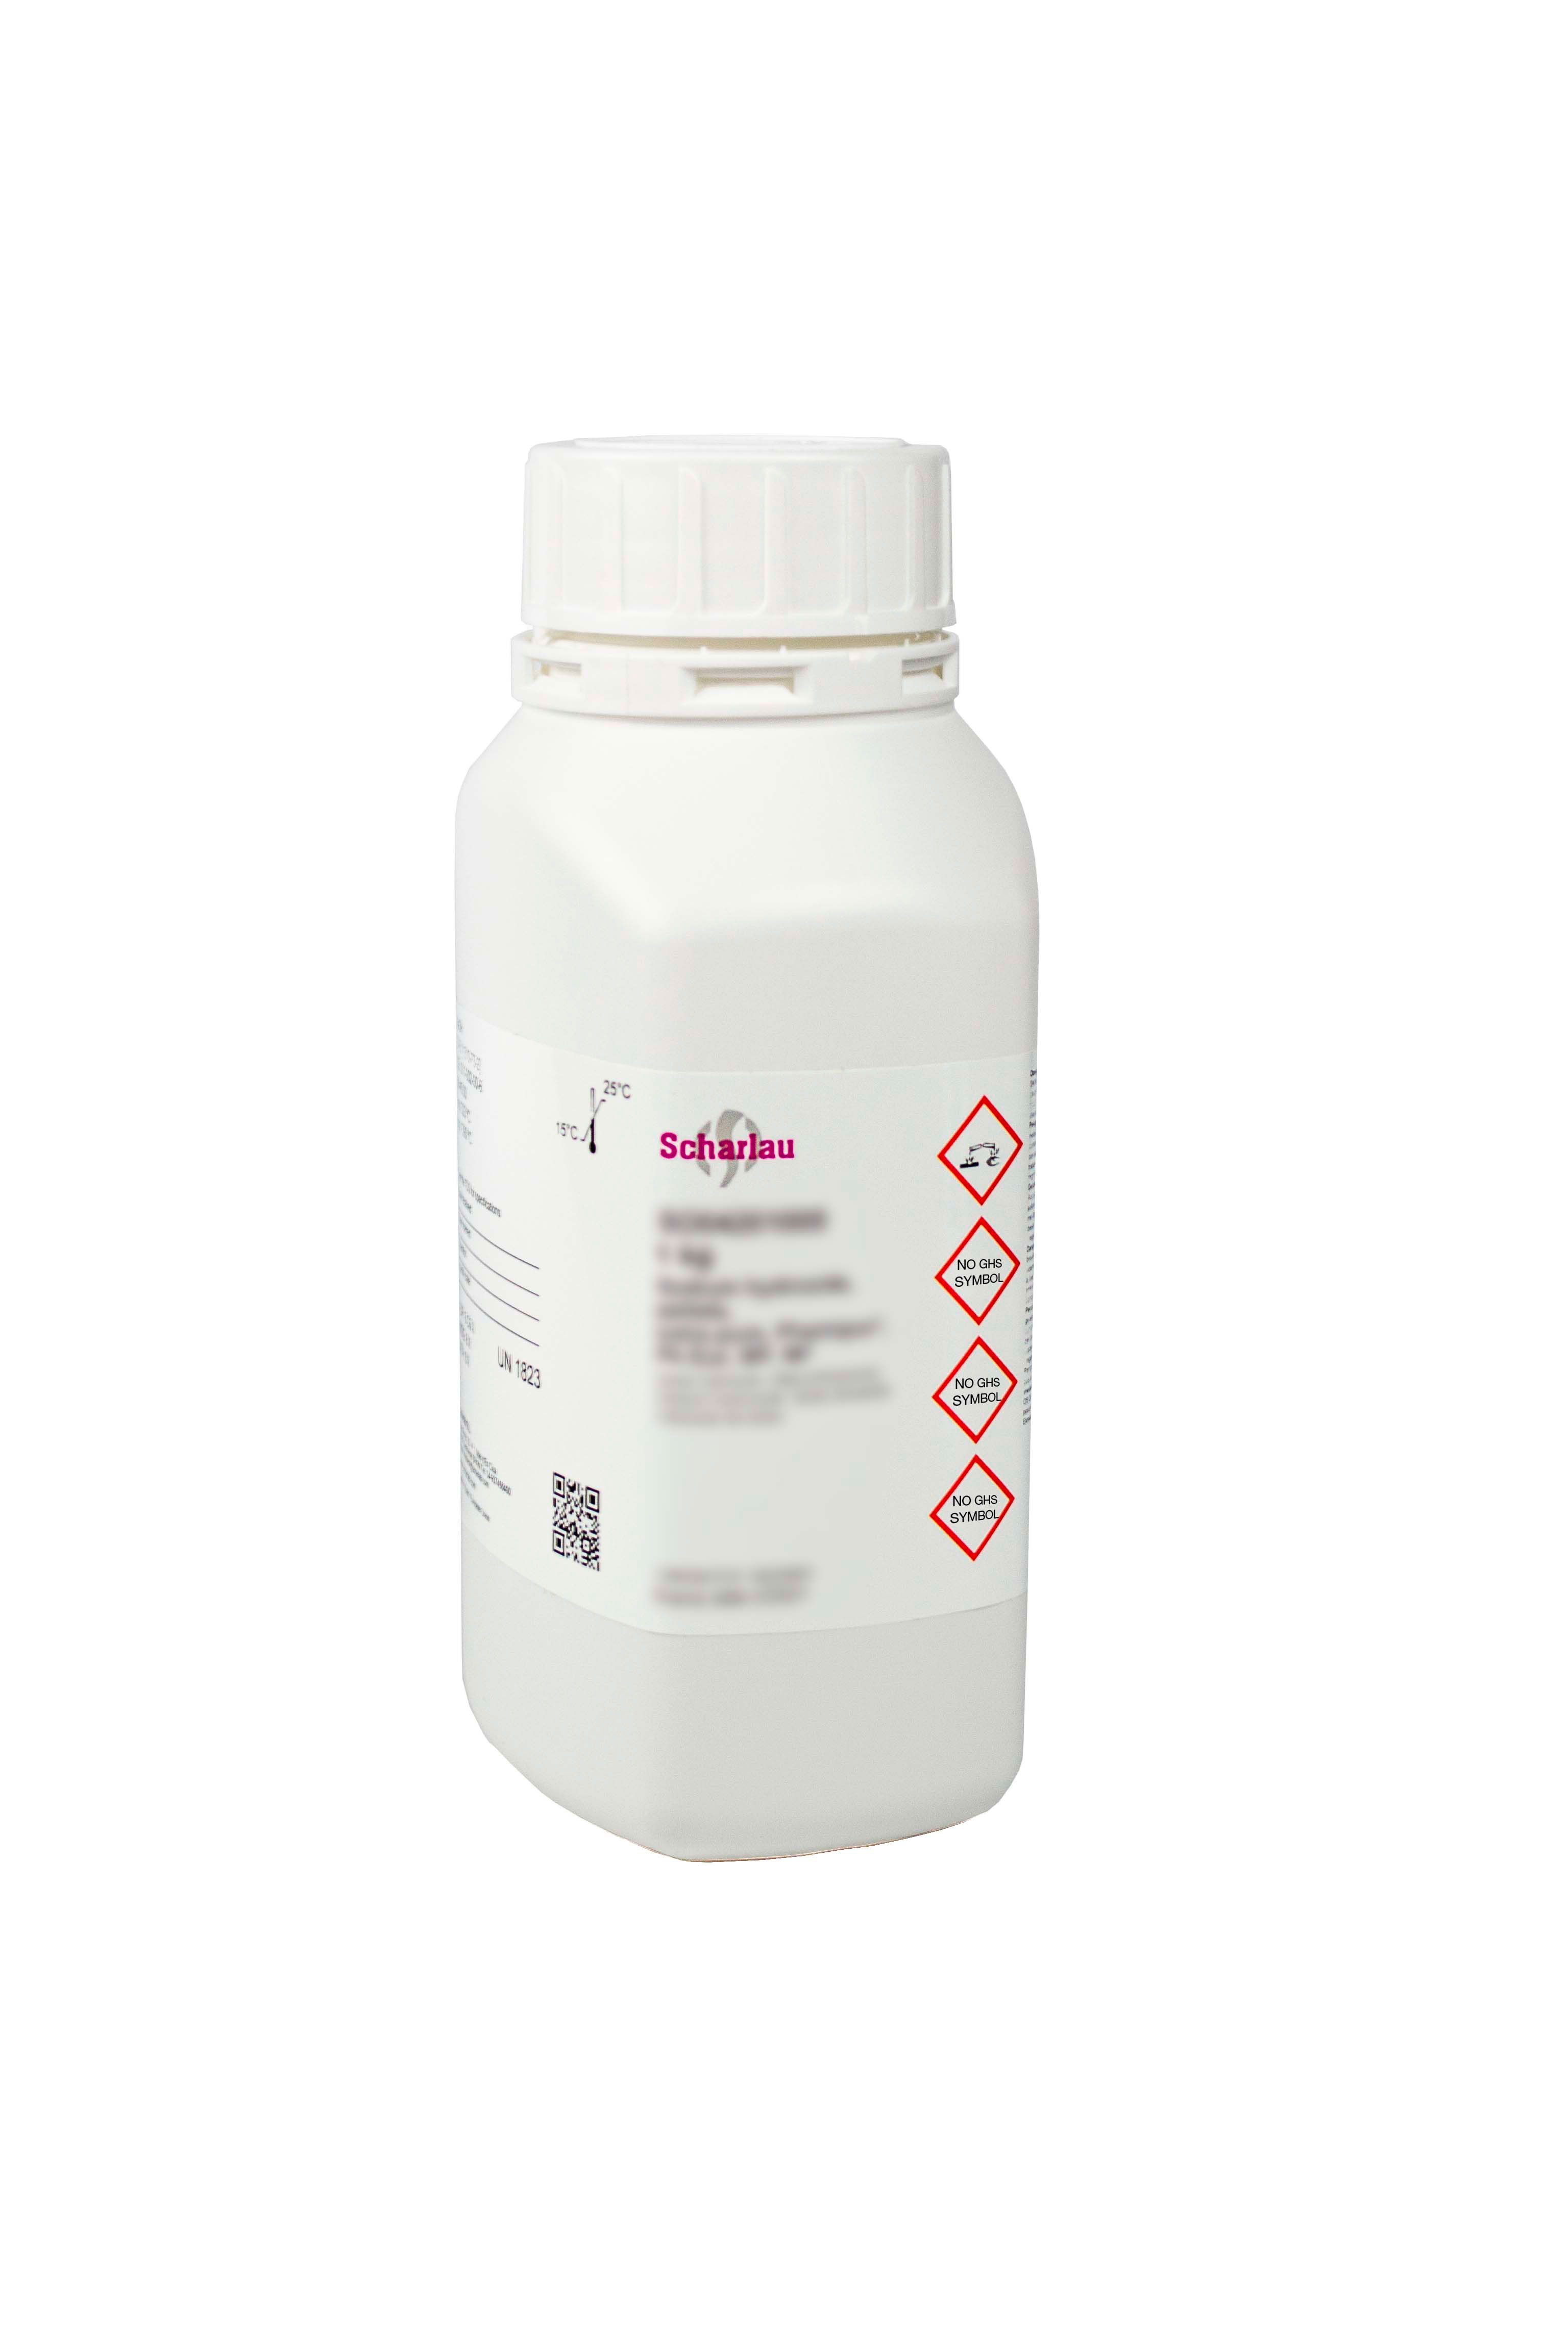 Sodium bromide, Pharmpur®, Ph Eur, BP, USP